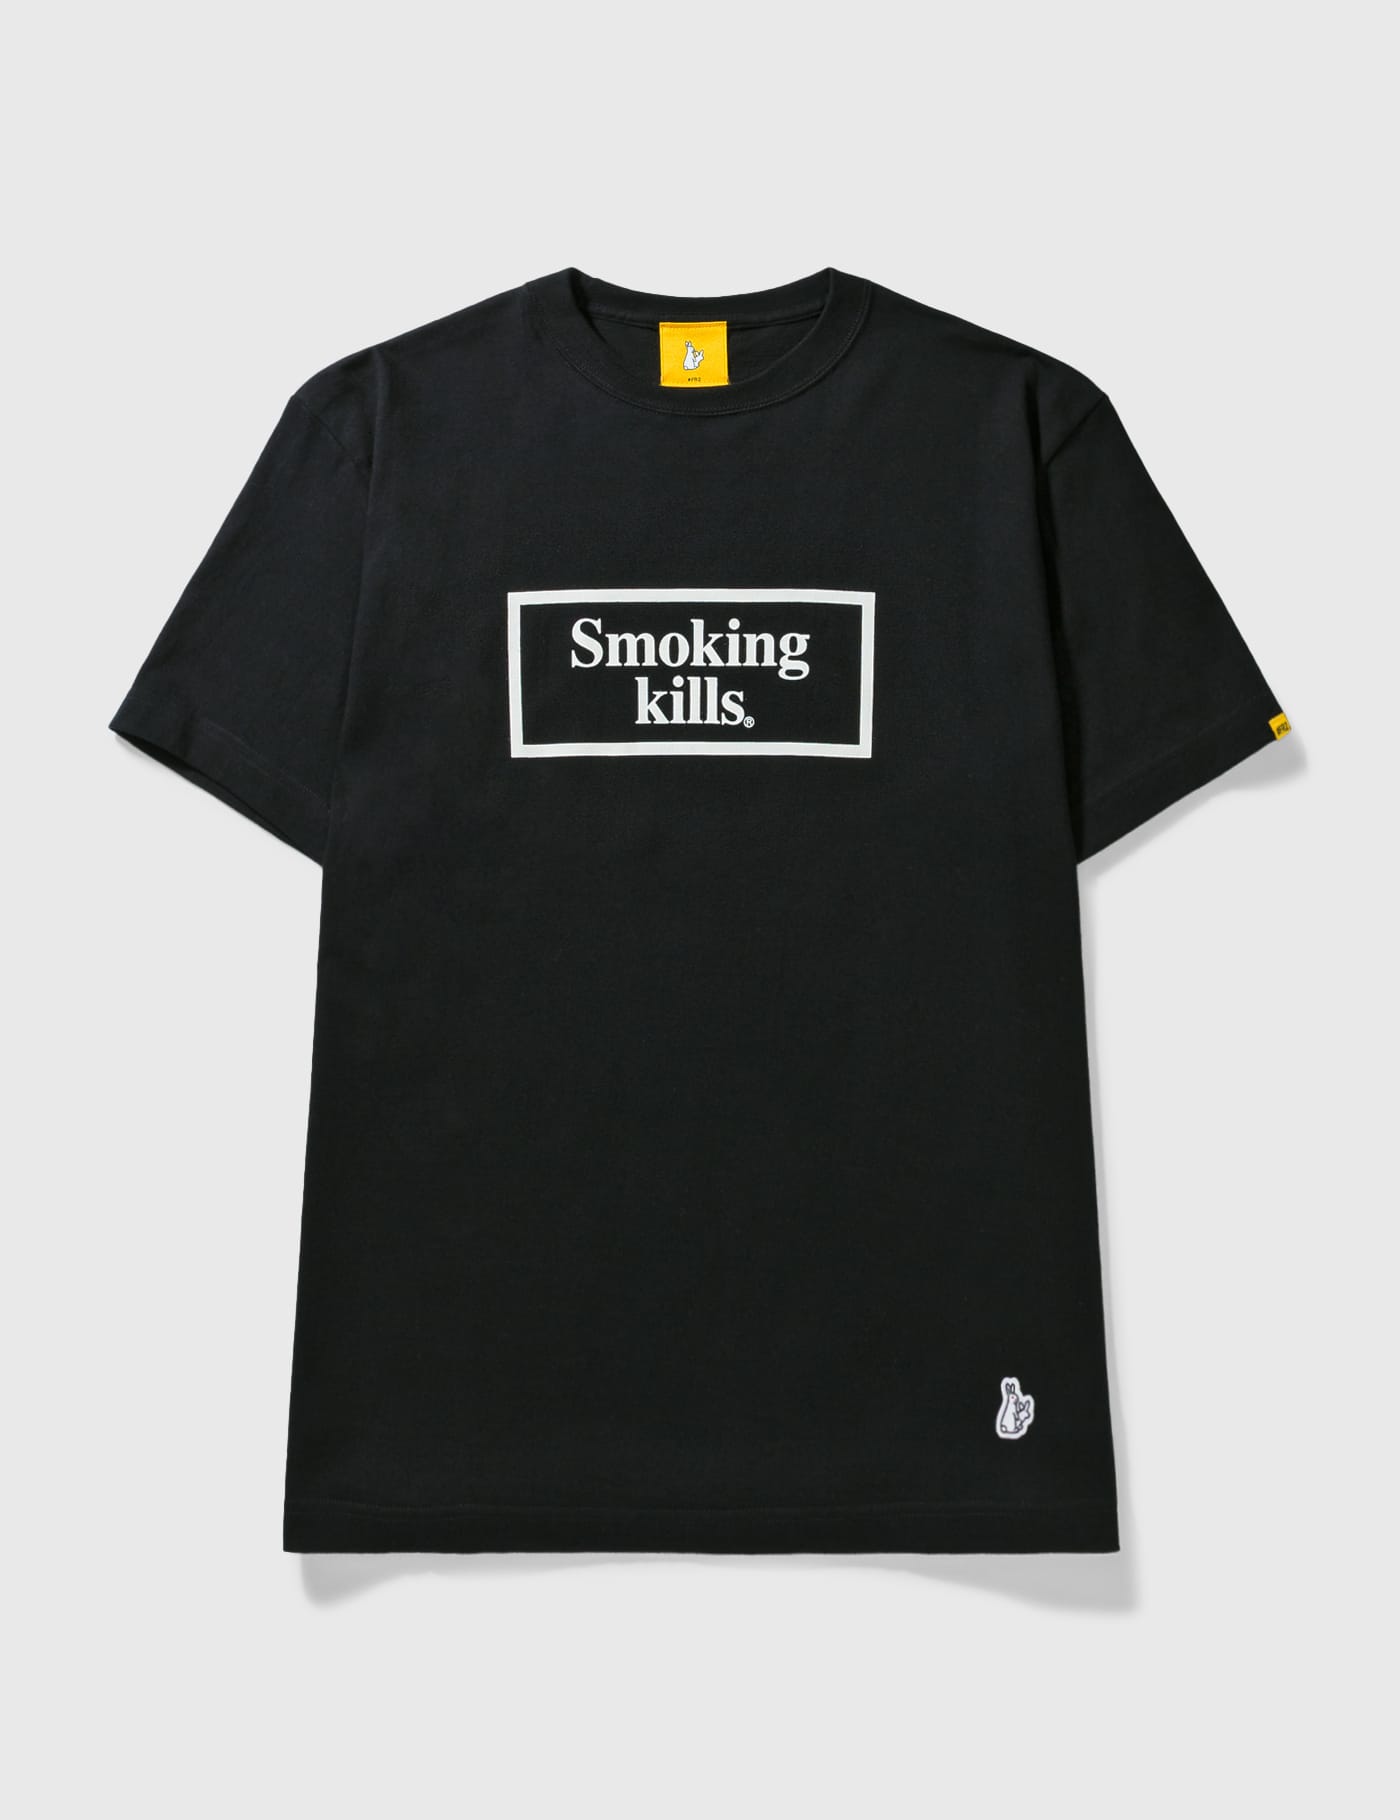 【57%OFF!】 FR2 smoking kills ボックスロゴ Tシャツ 新品未開封 